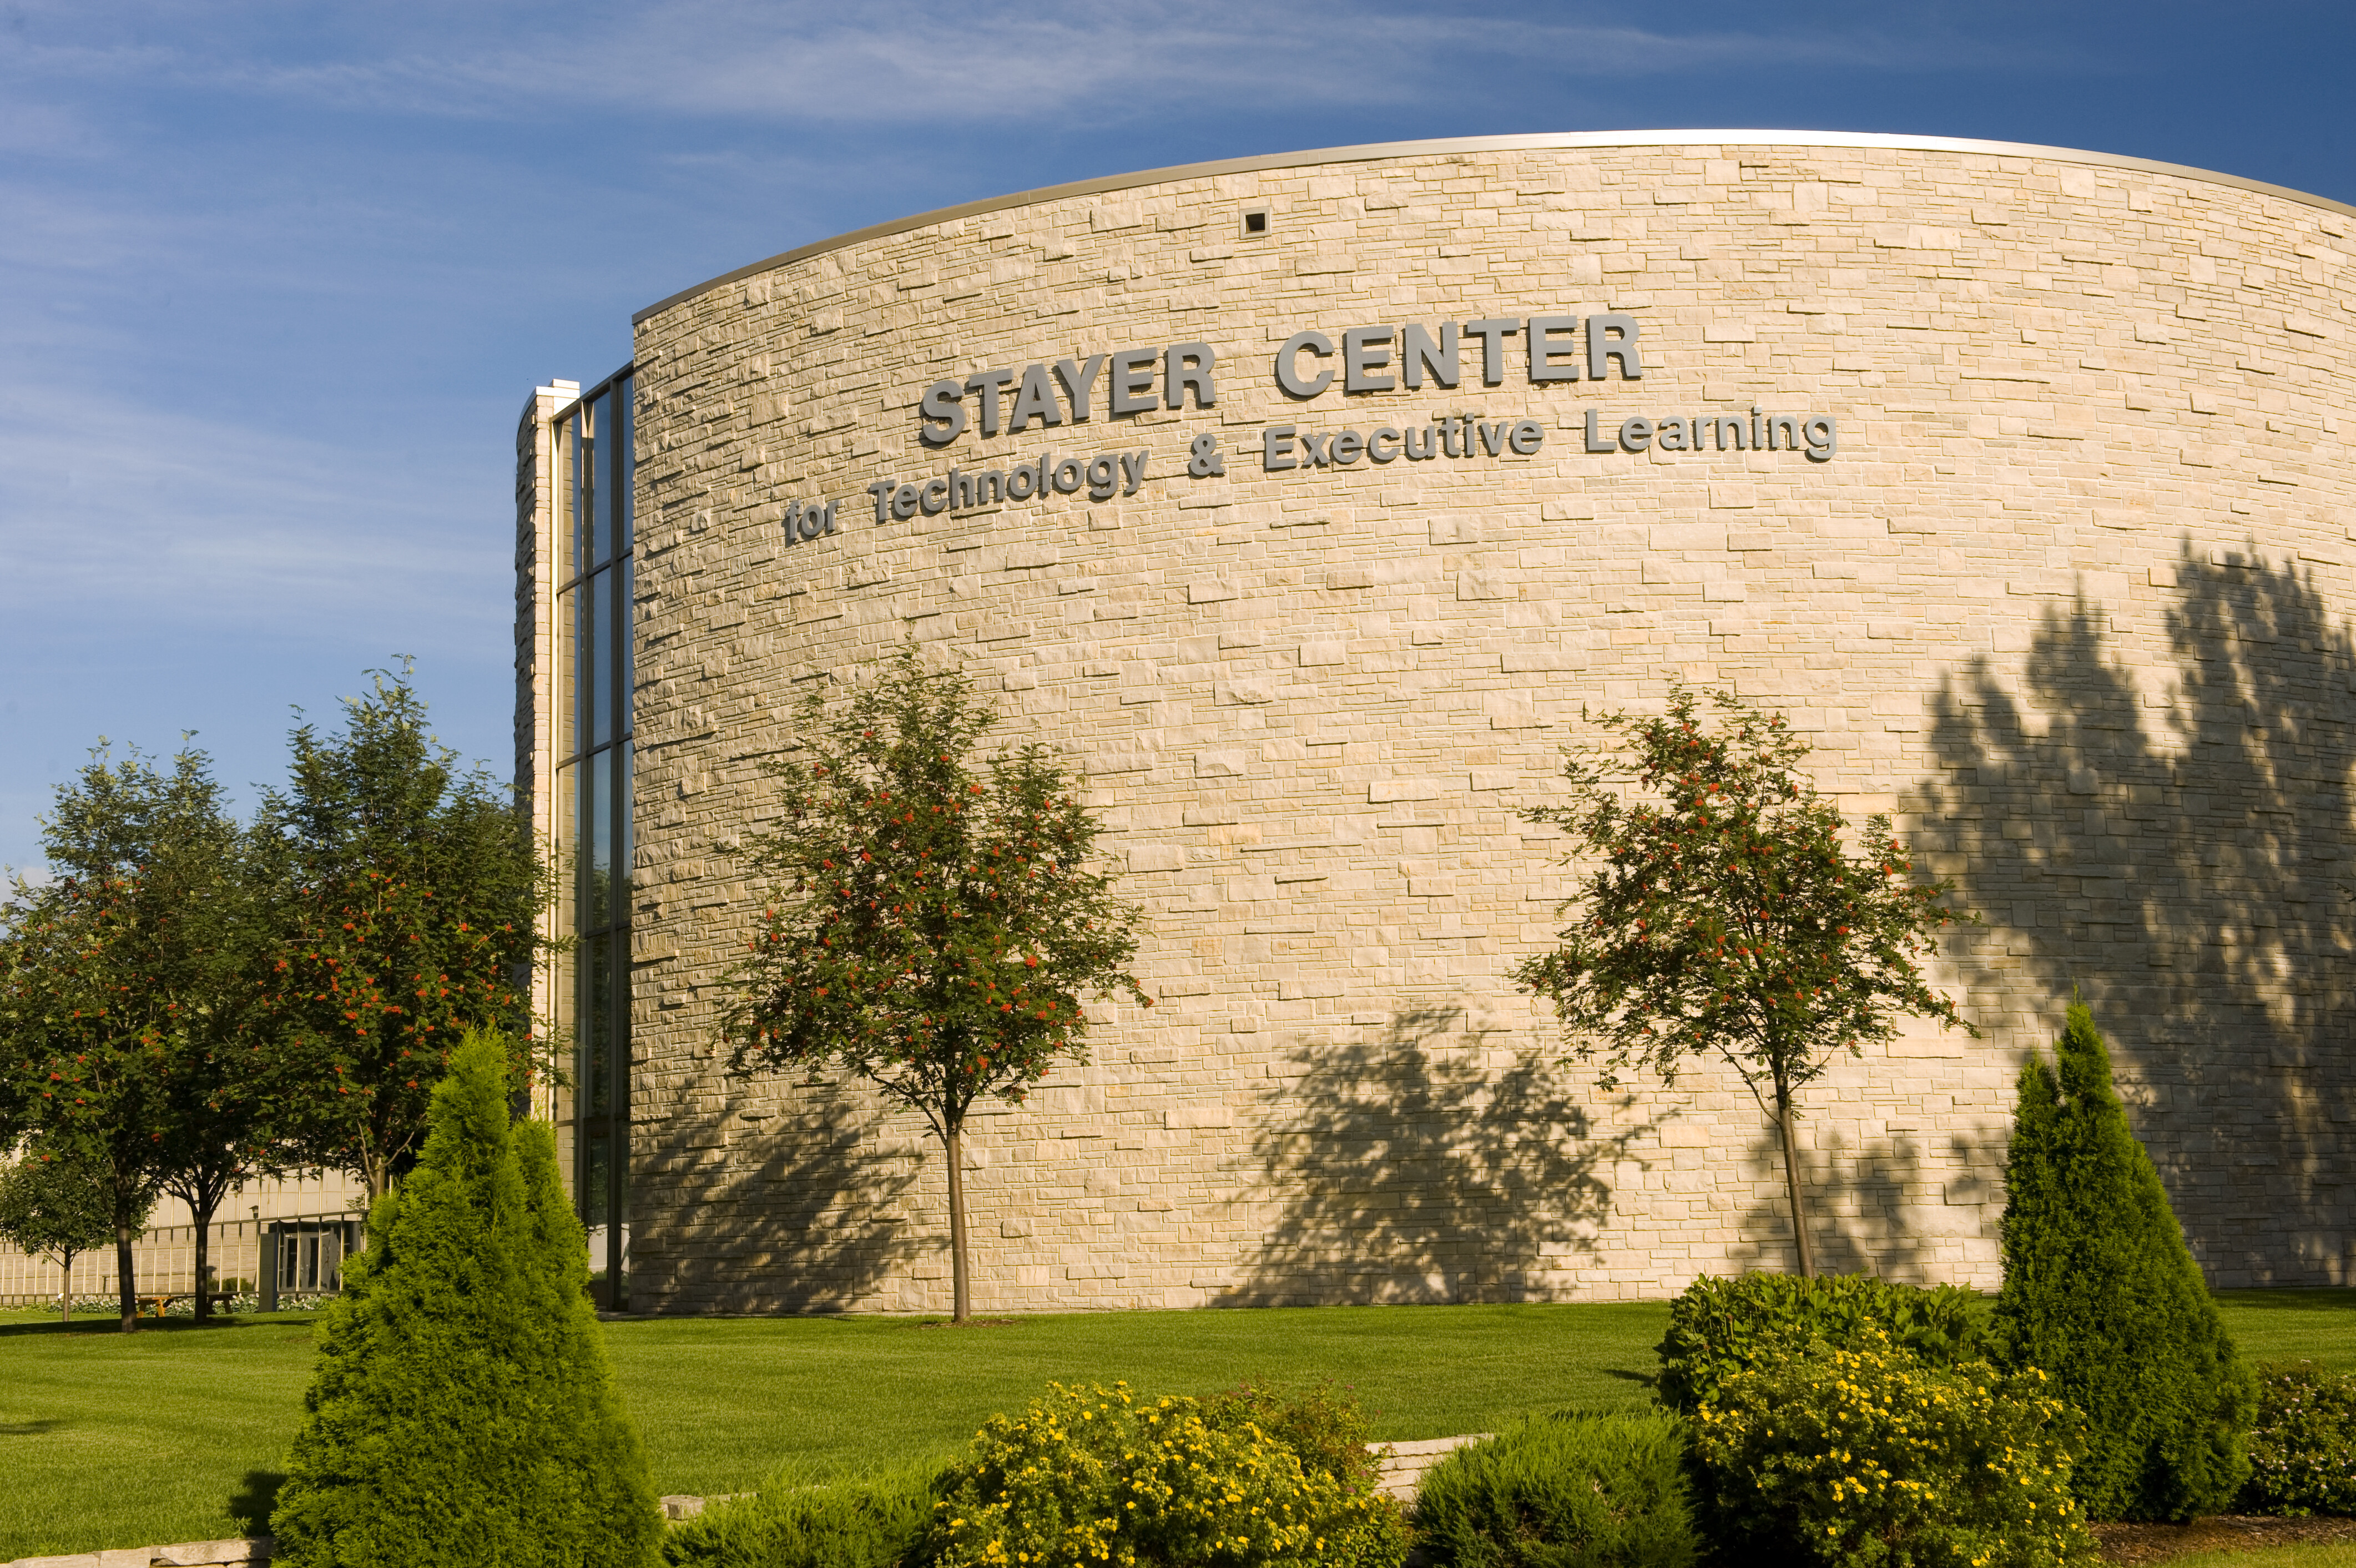 Stayer Center